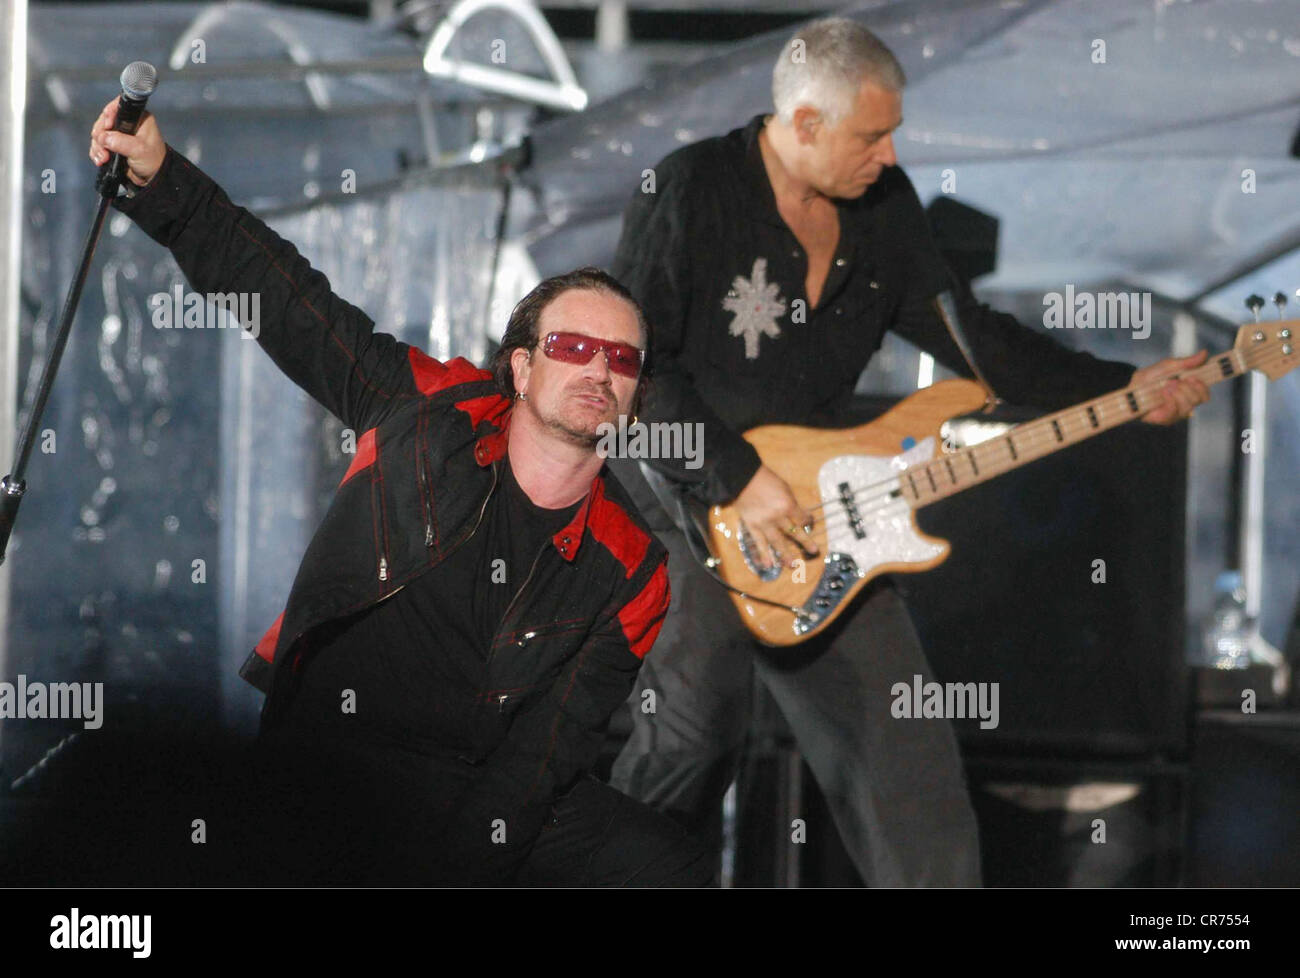 U2, Irish rock band, frontman Bono Vox is singing in the rain, half length, Olympic stadium, Munich, Germany, 2.8.2005, Stock Photo